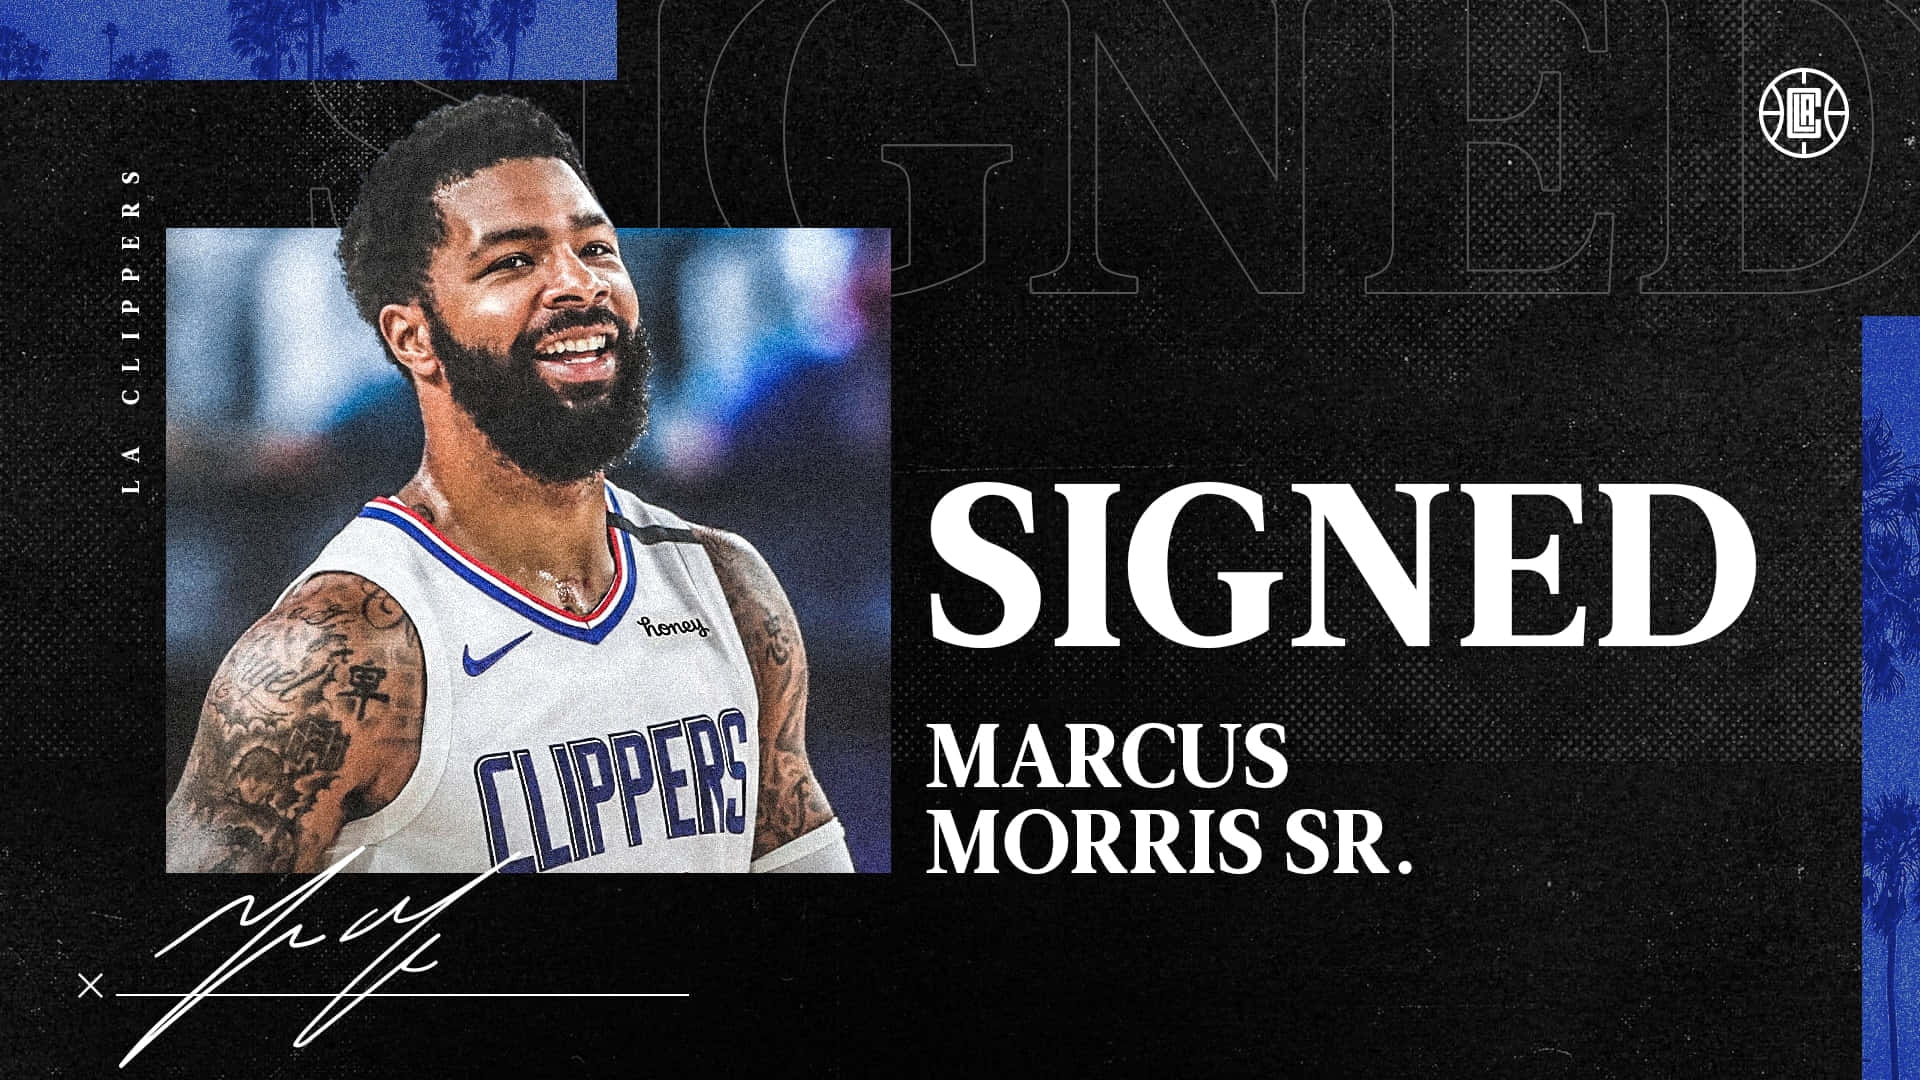 Losangeles Clippers Haben Marcus Morris Sr. Unter Vertrag Genommen. Wallpaper